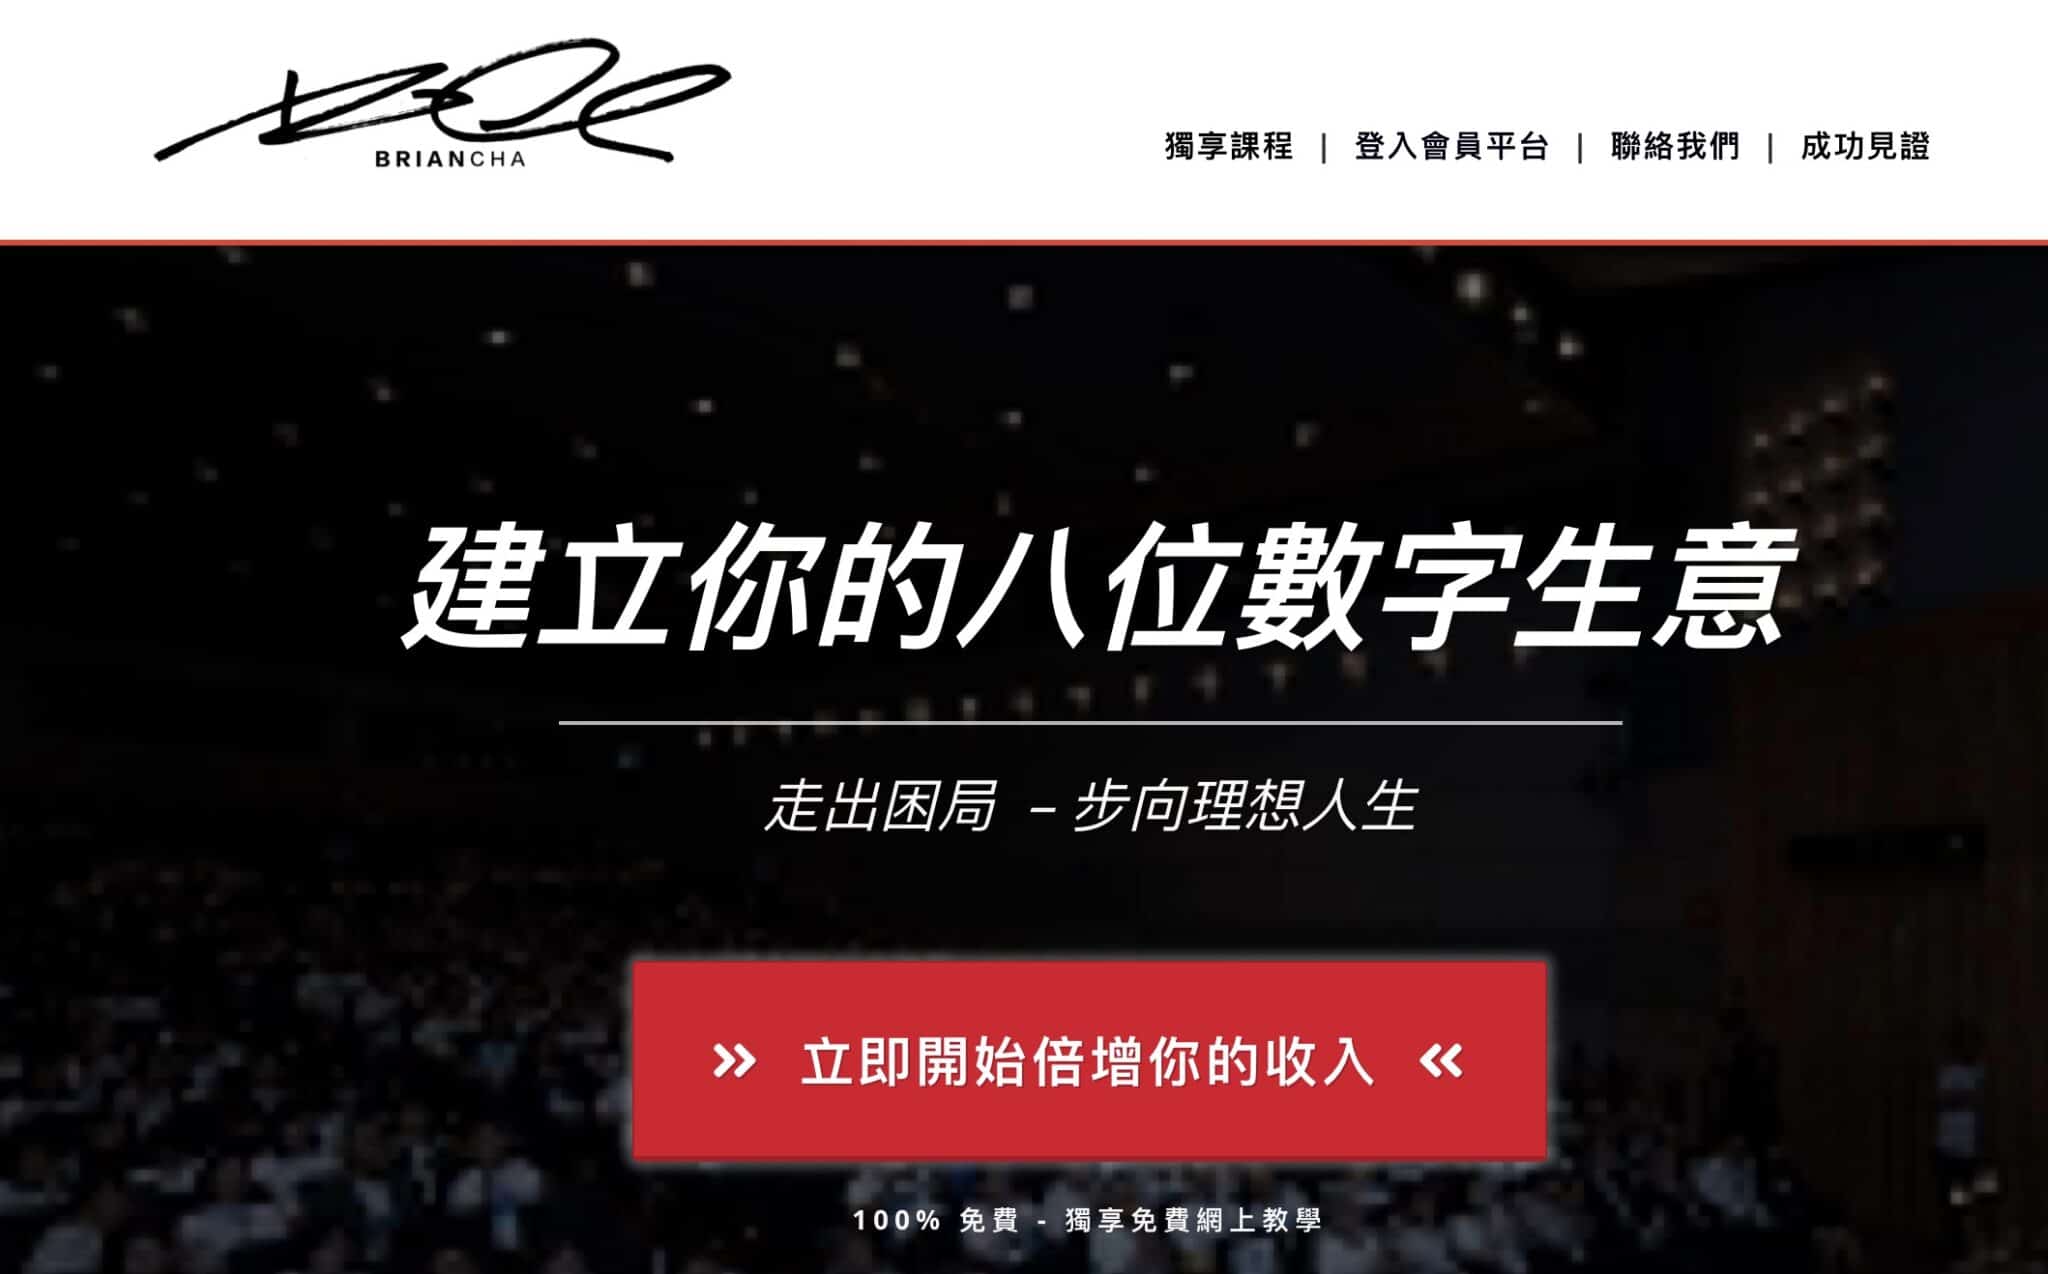 brian cha website